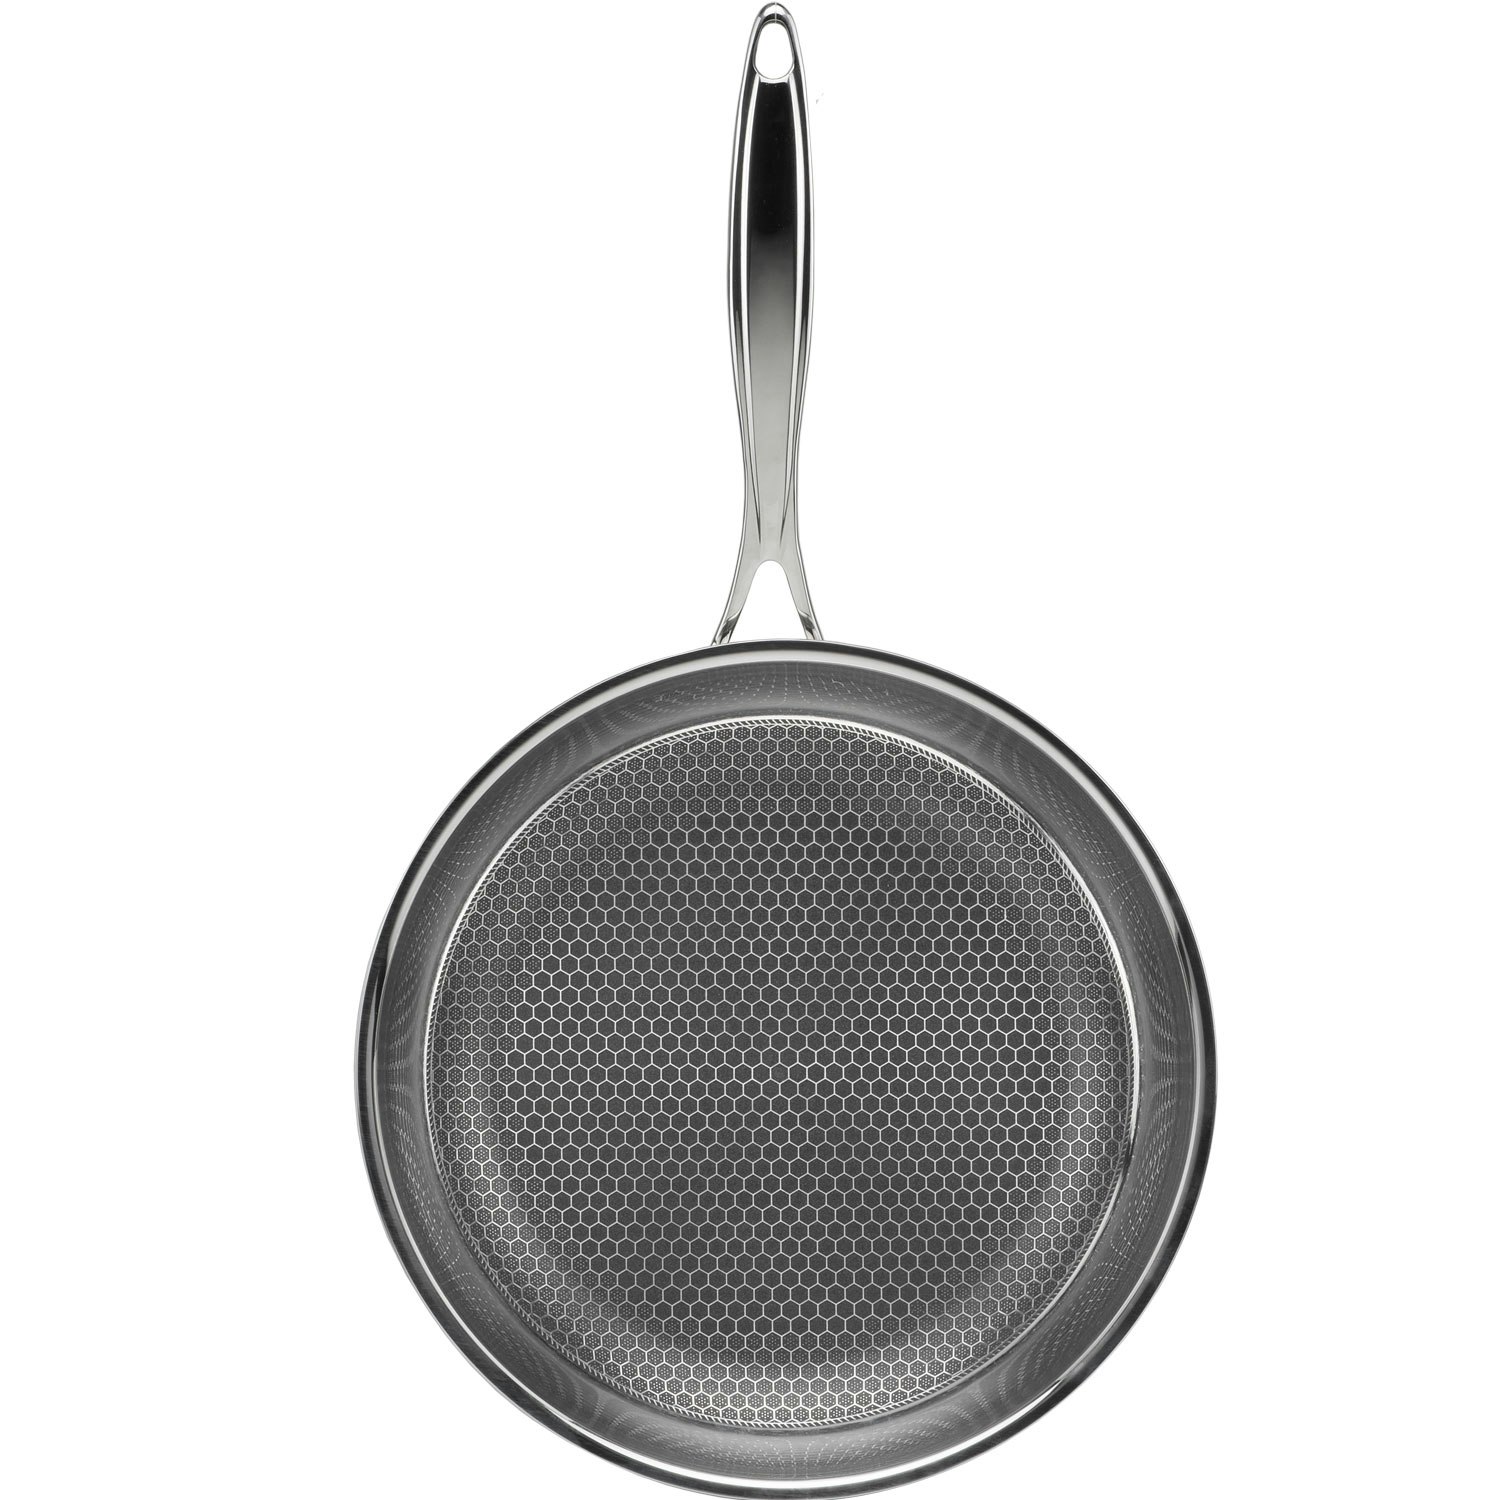 Steelsafe Frying Pan 28 cm - Heirol @ 